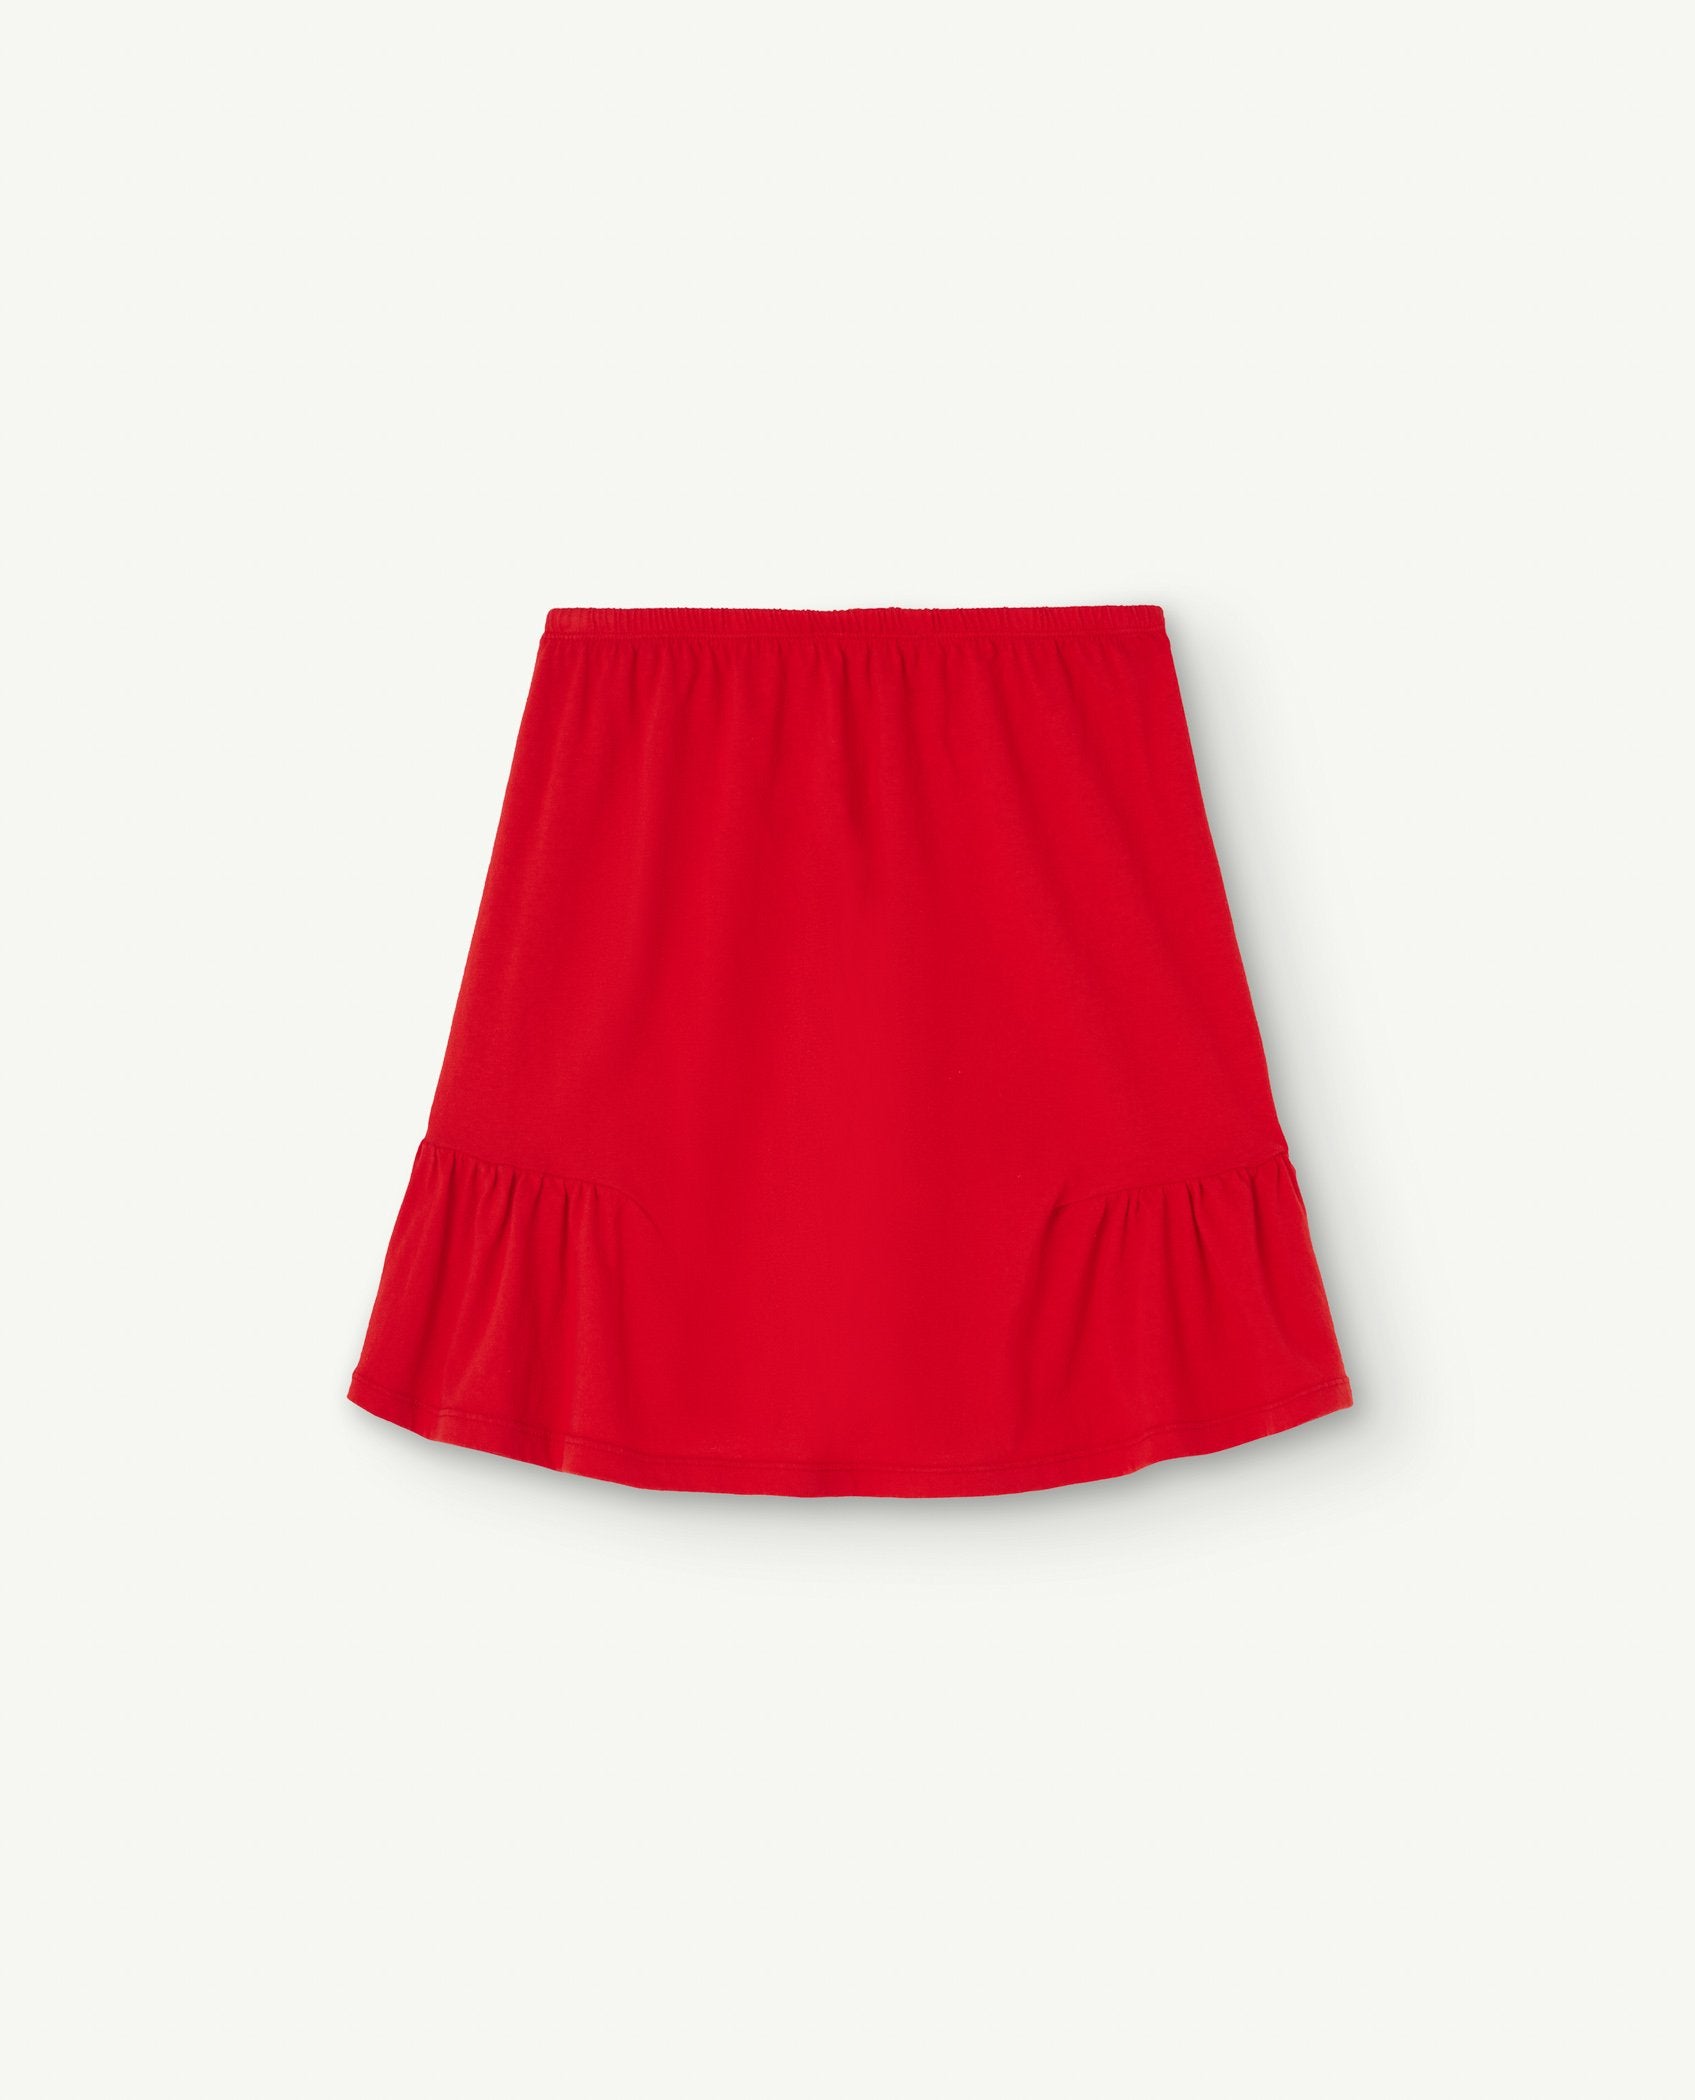 Red Slug Skirt PRODUCT BACK